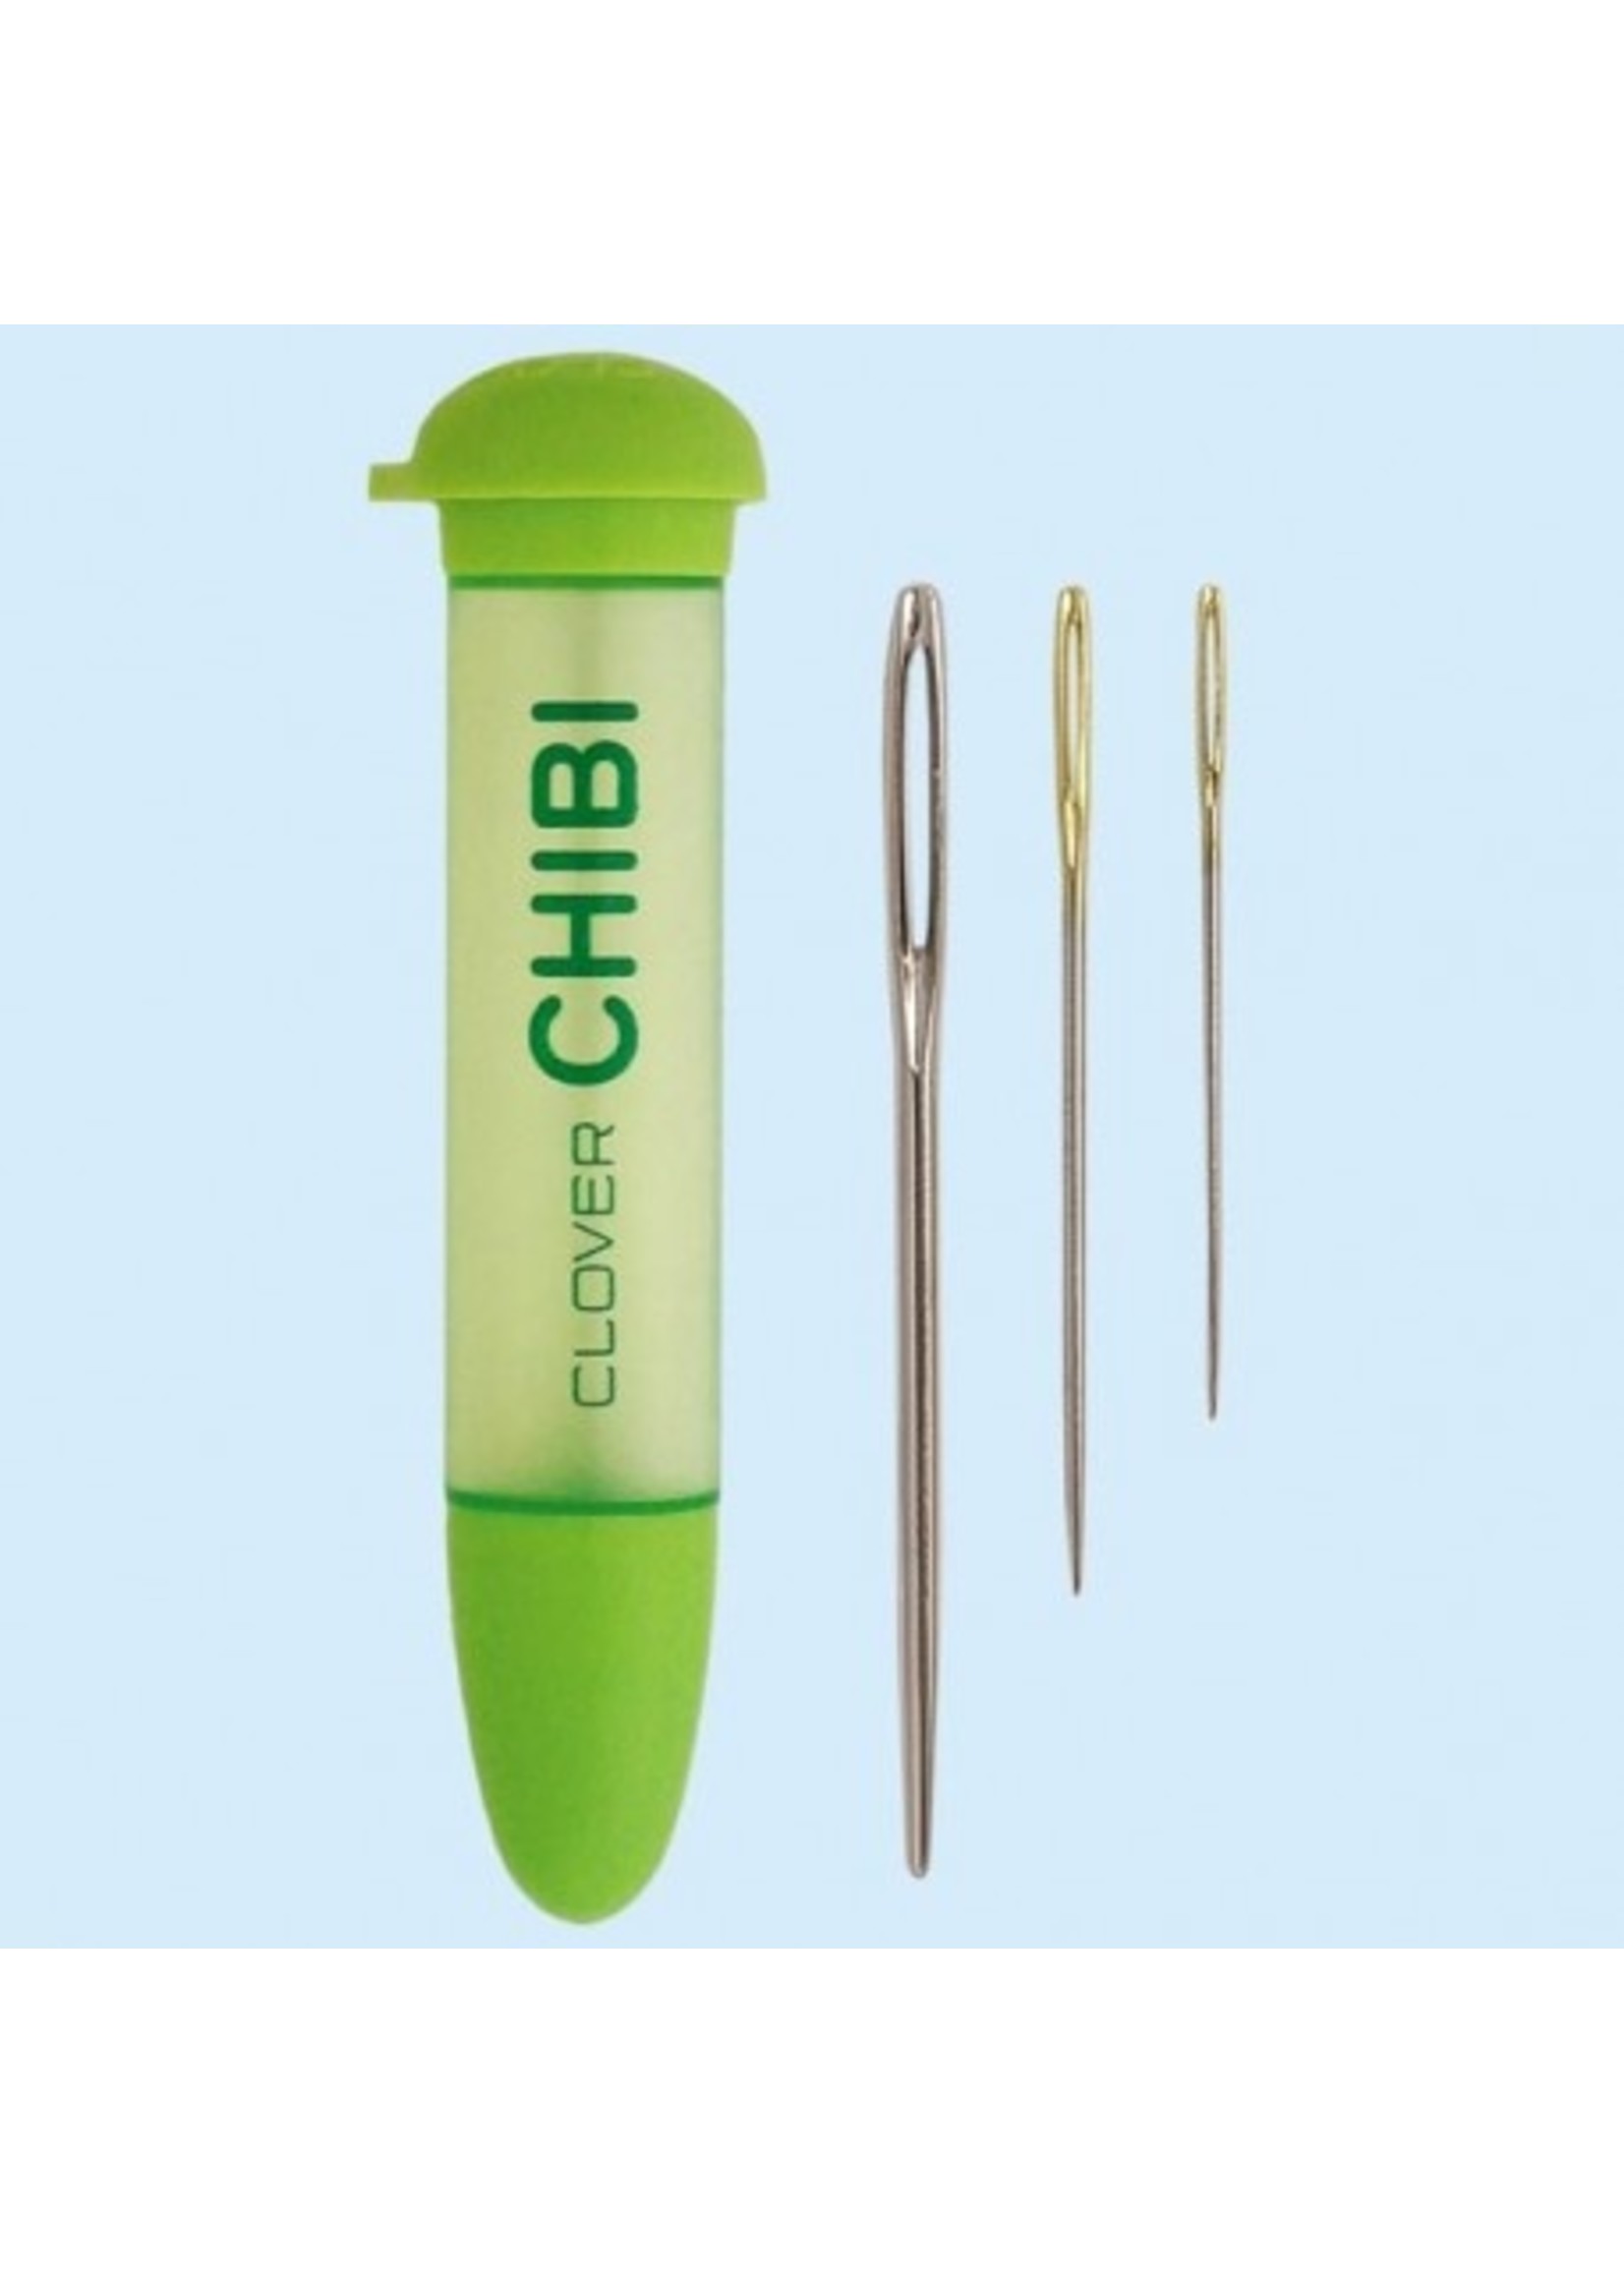 Chibi Small Darning Needle Set 3121